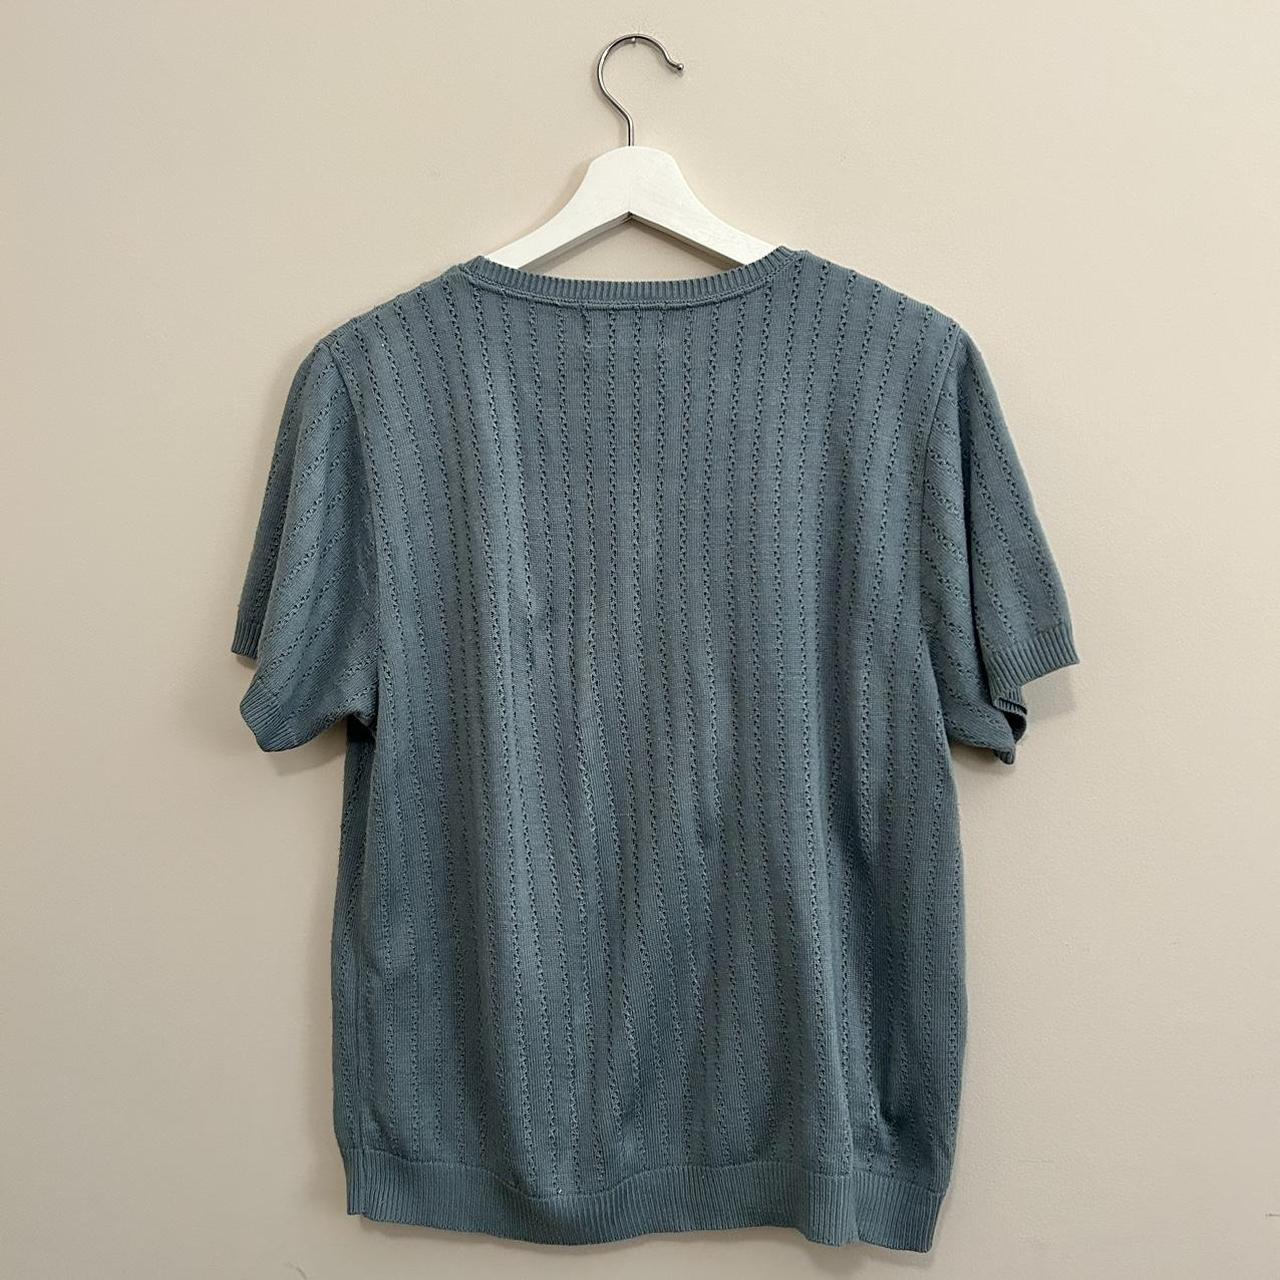 vintage knit short-sleeve patterned sweater top from... - Depop